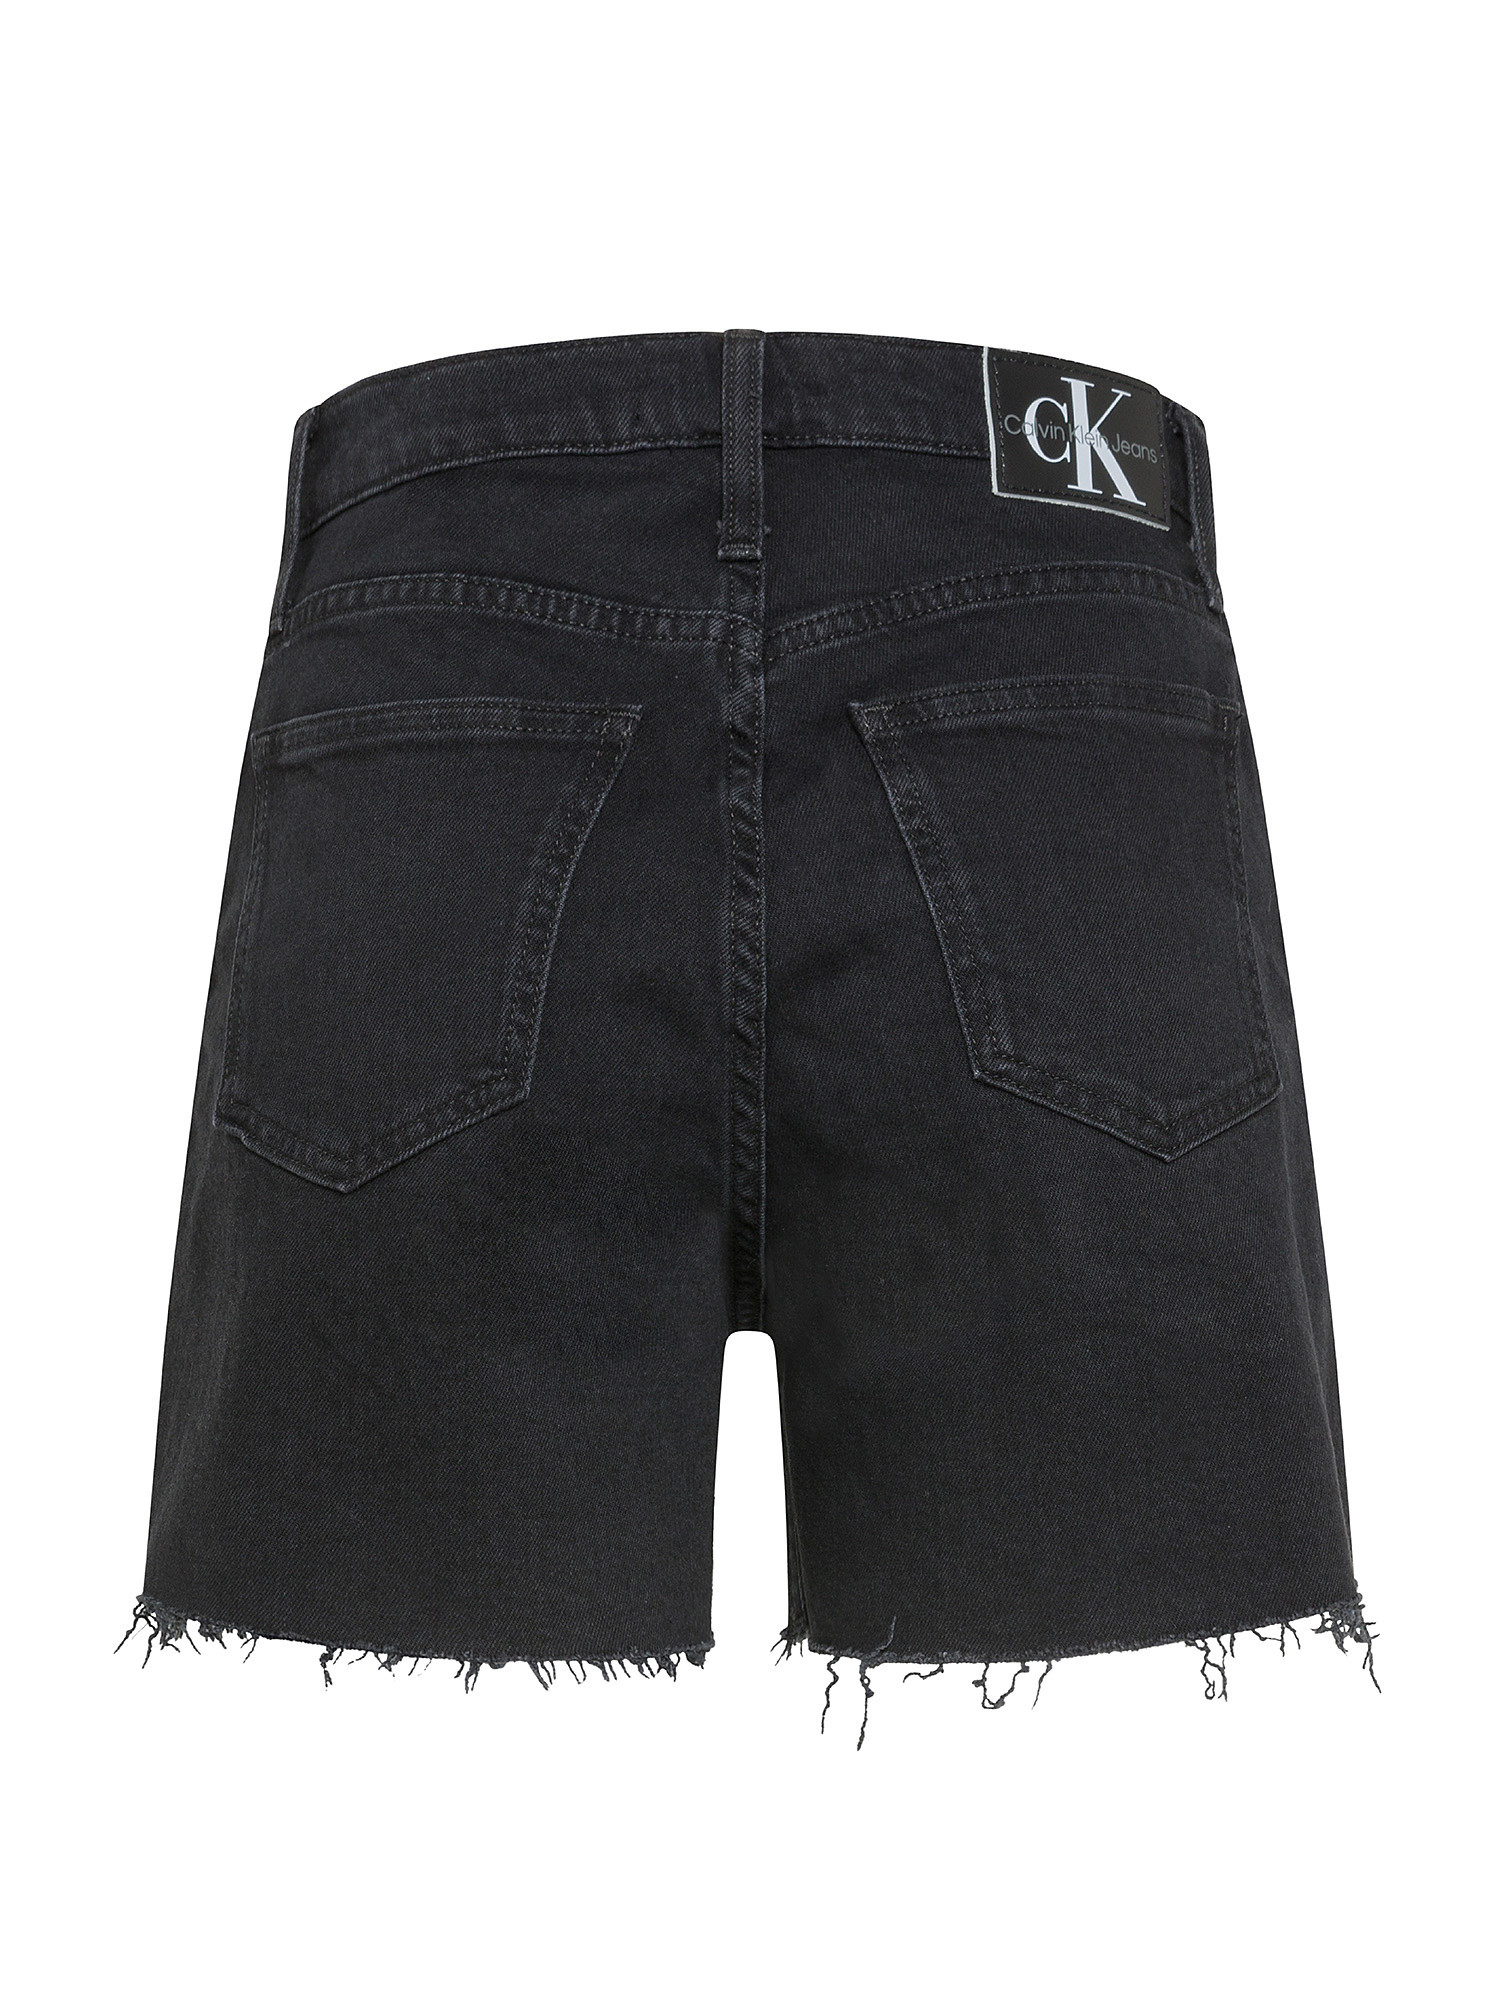 Calvin Klein Jeans - Shorts in denim, Nero, large image number 1